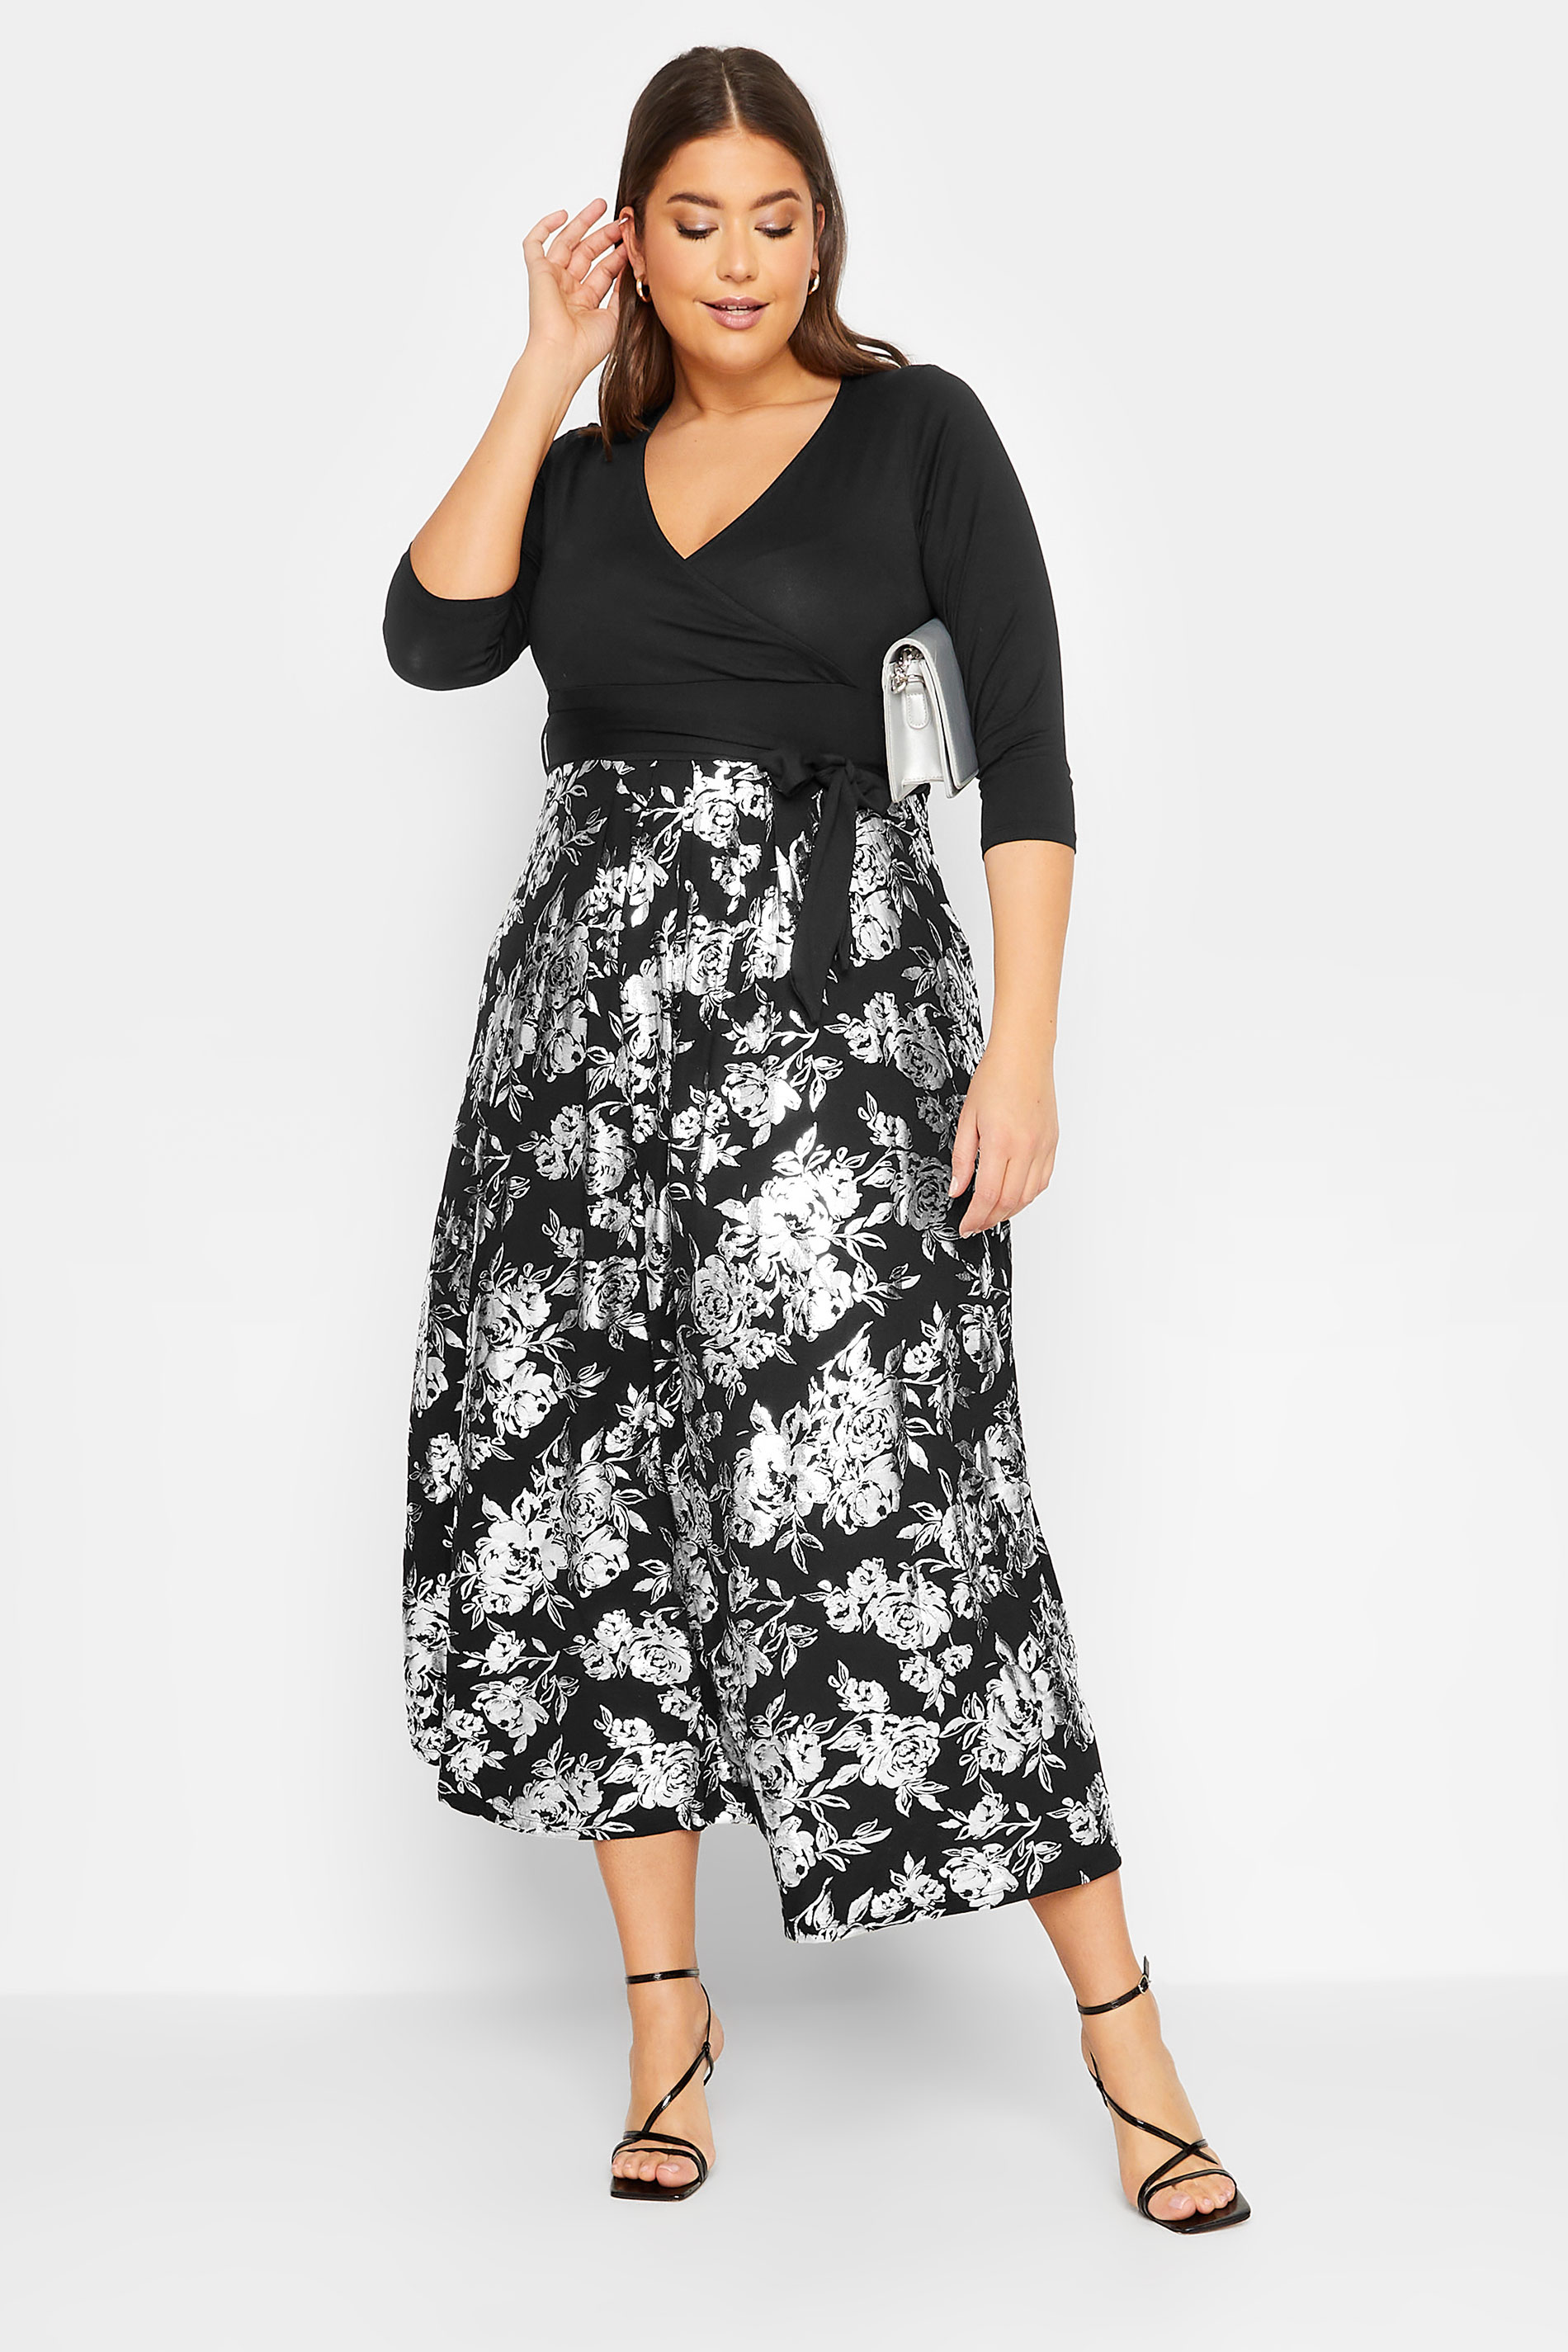 YOURS LUXURY Plus Size Black & Silver Foil Floral Print Wrap Dress | Yours Clothing 2